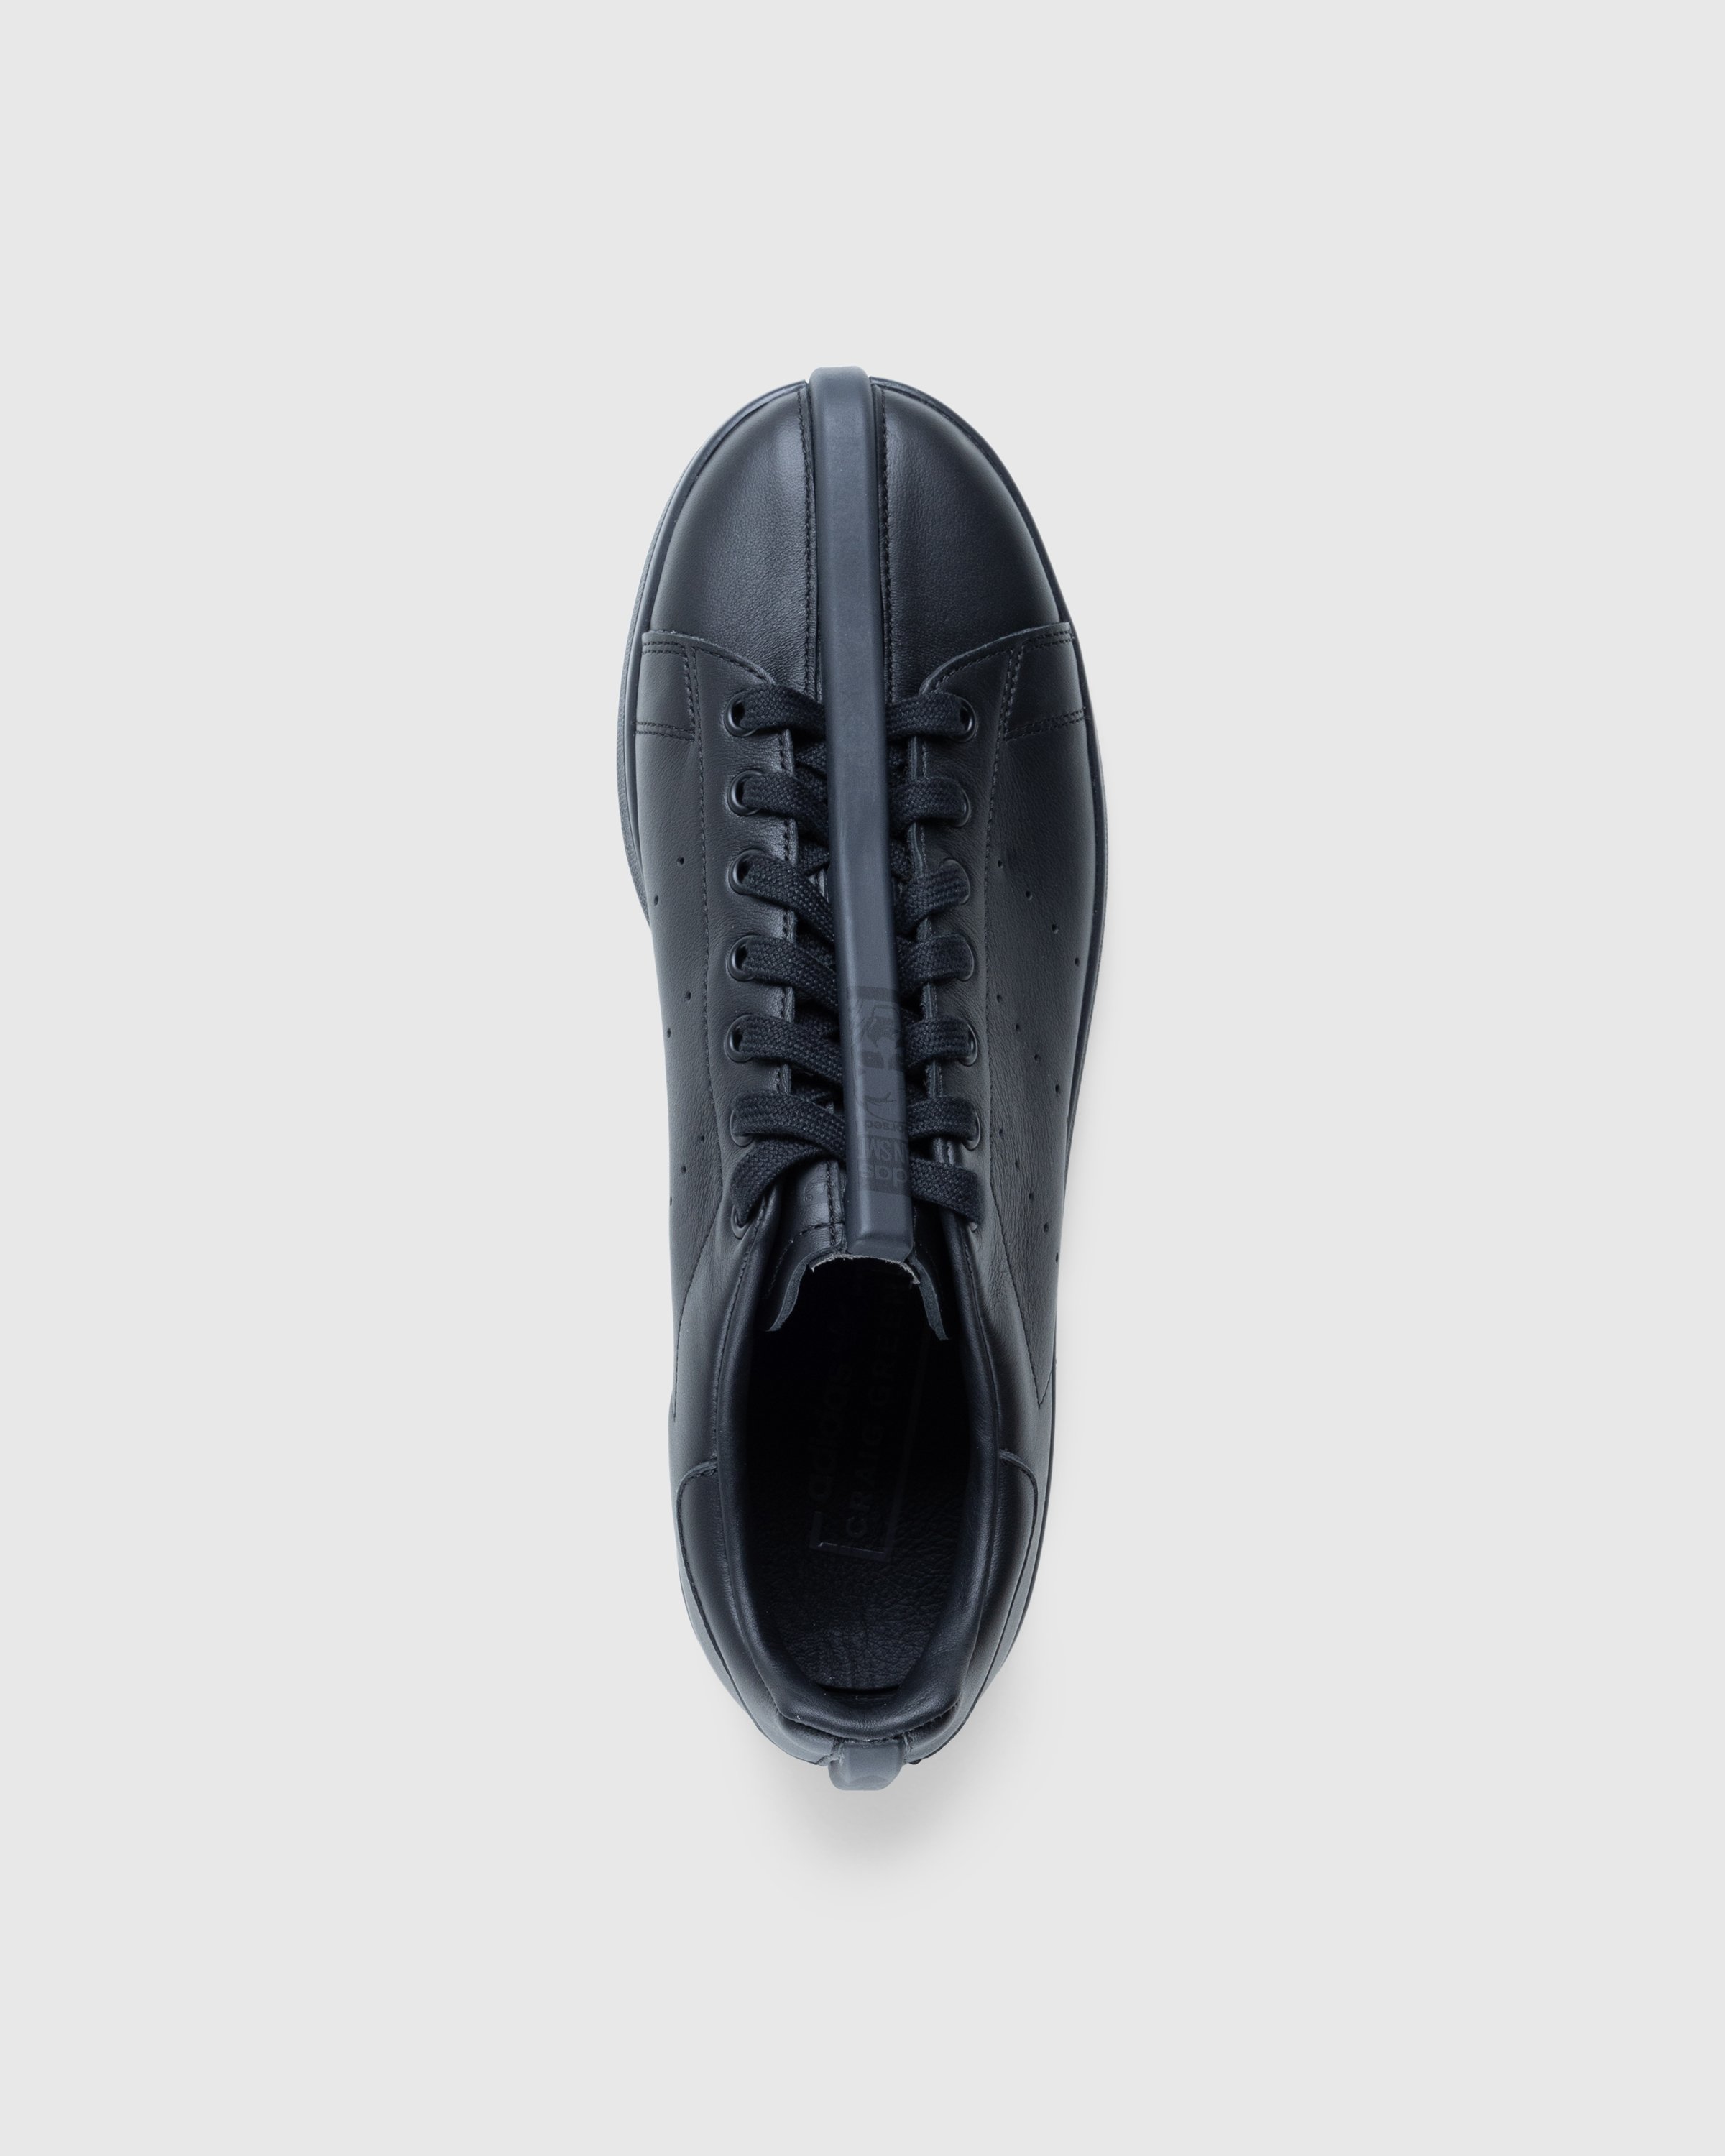 Craig Green x Adidas - CG Split Stan Smith core black/core black/granite - Footwear - Black - Image 5